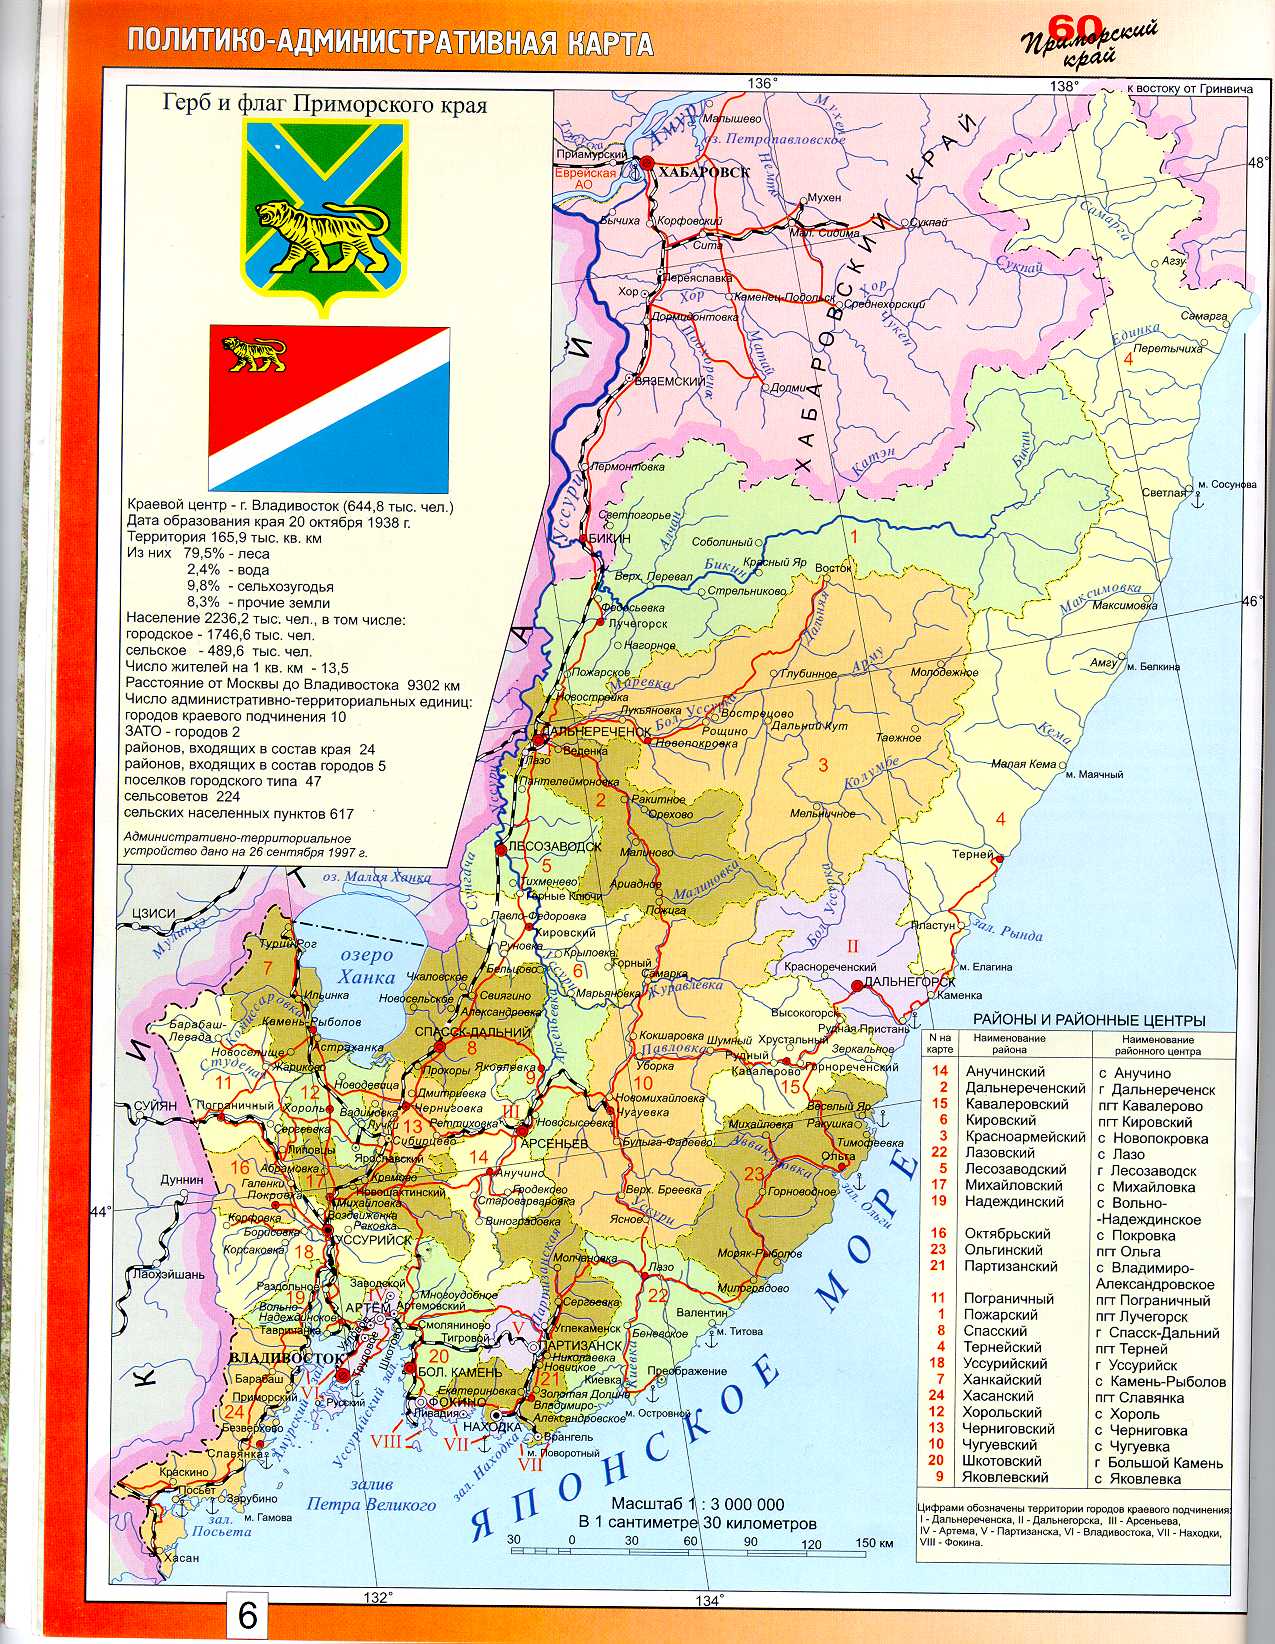 Political and Administrative Map of Primorskii Krai